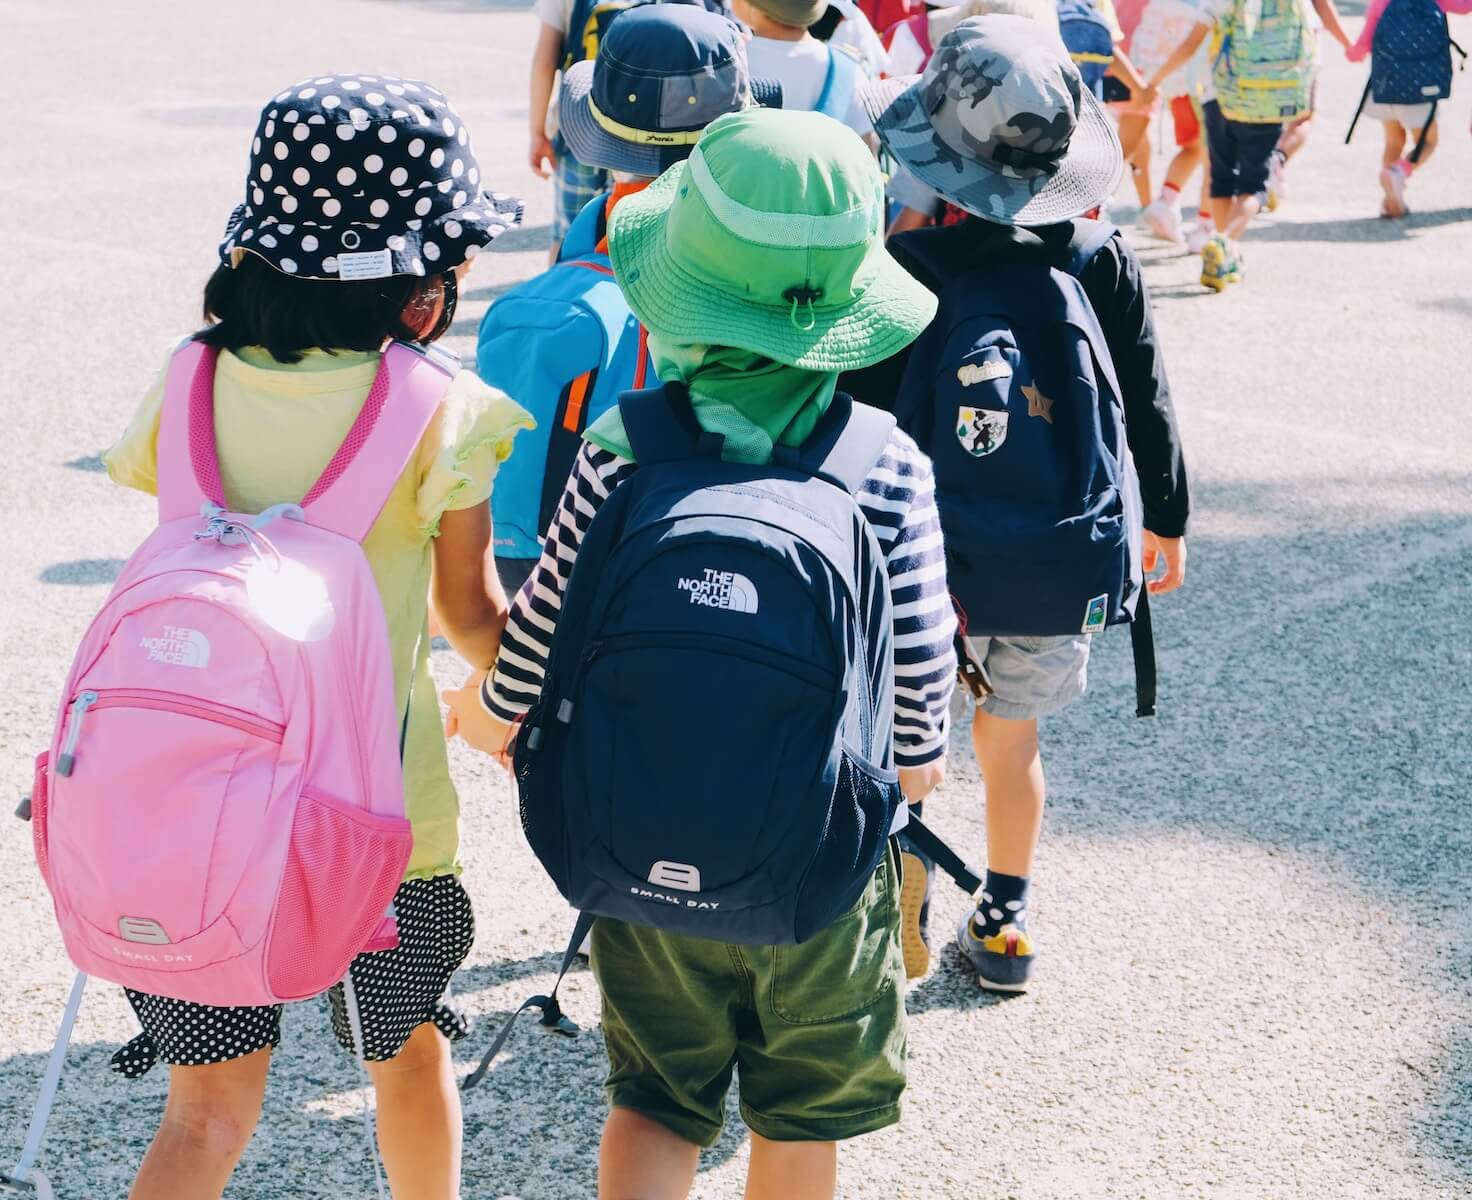 Kids walking to school wearing backpacks